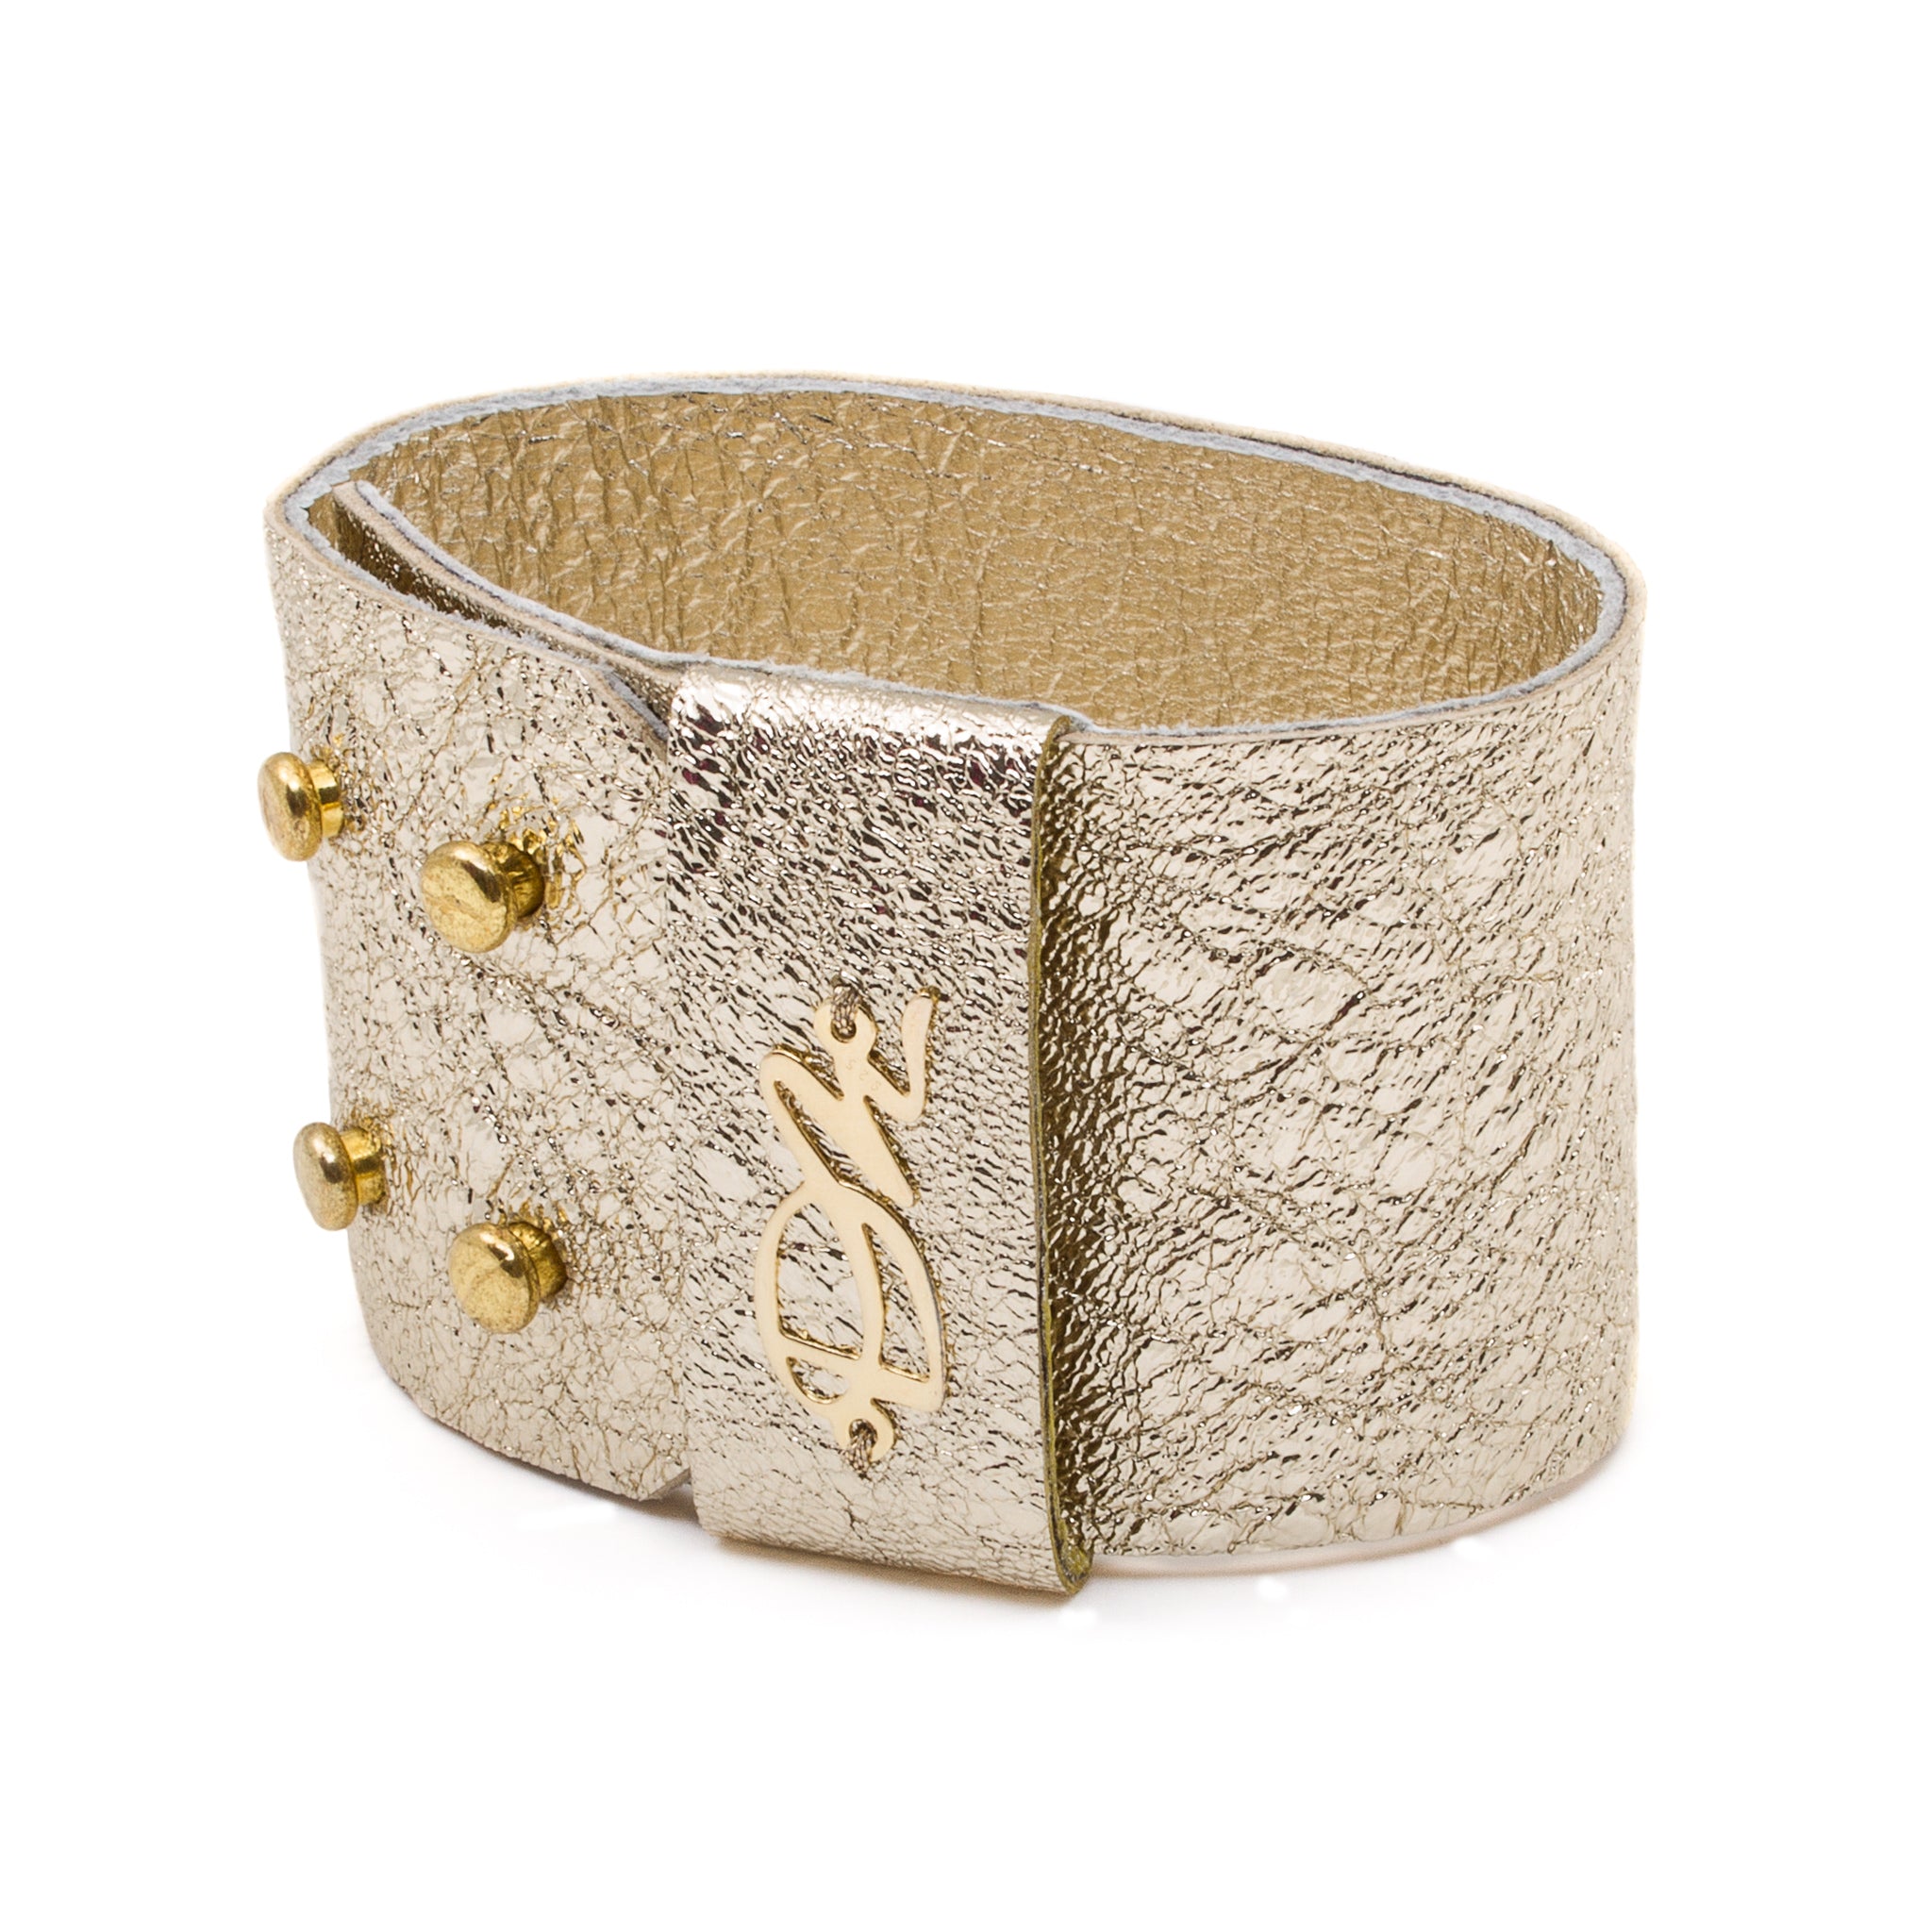 'Golden Wrist' Bracelet